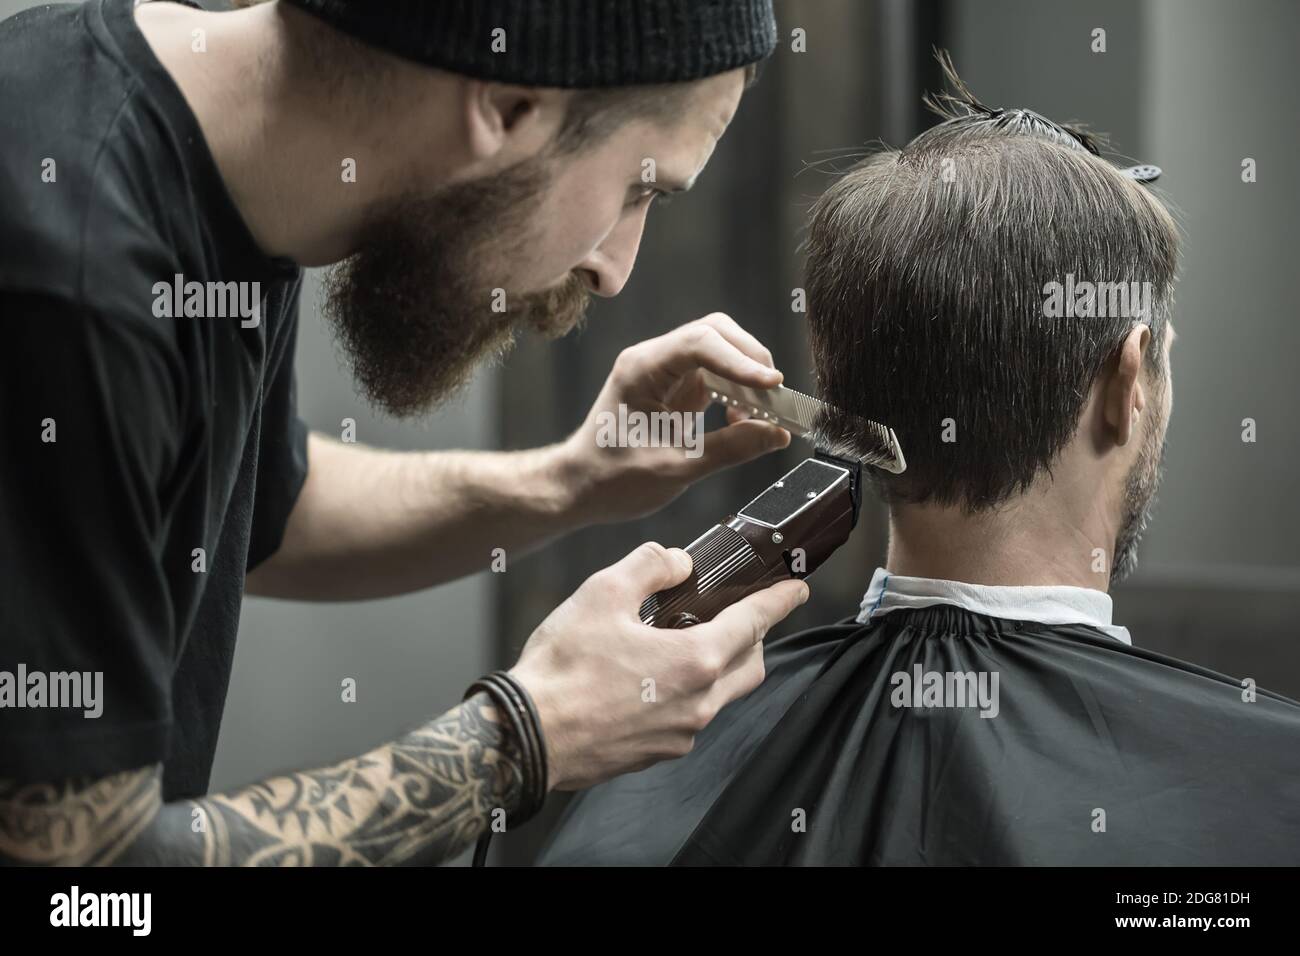 Cutting hair in barbershop Stock Photo